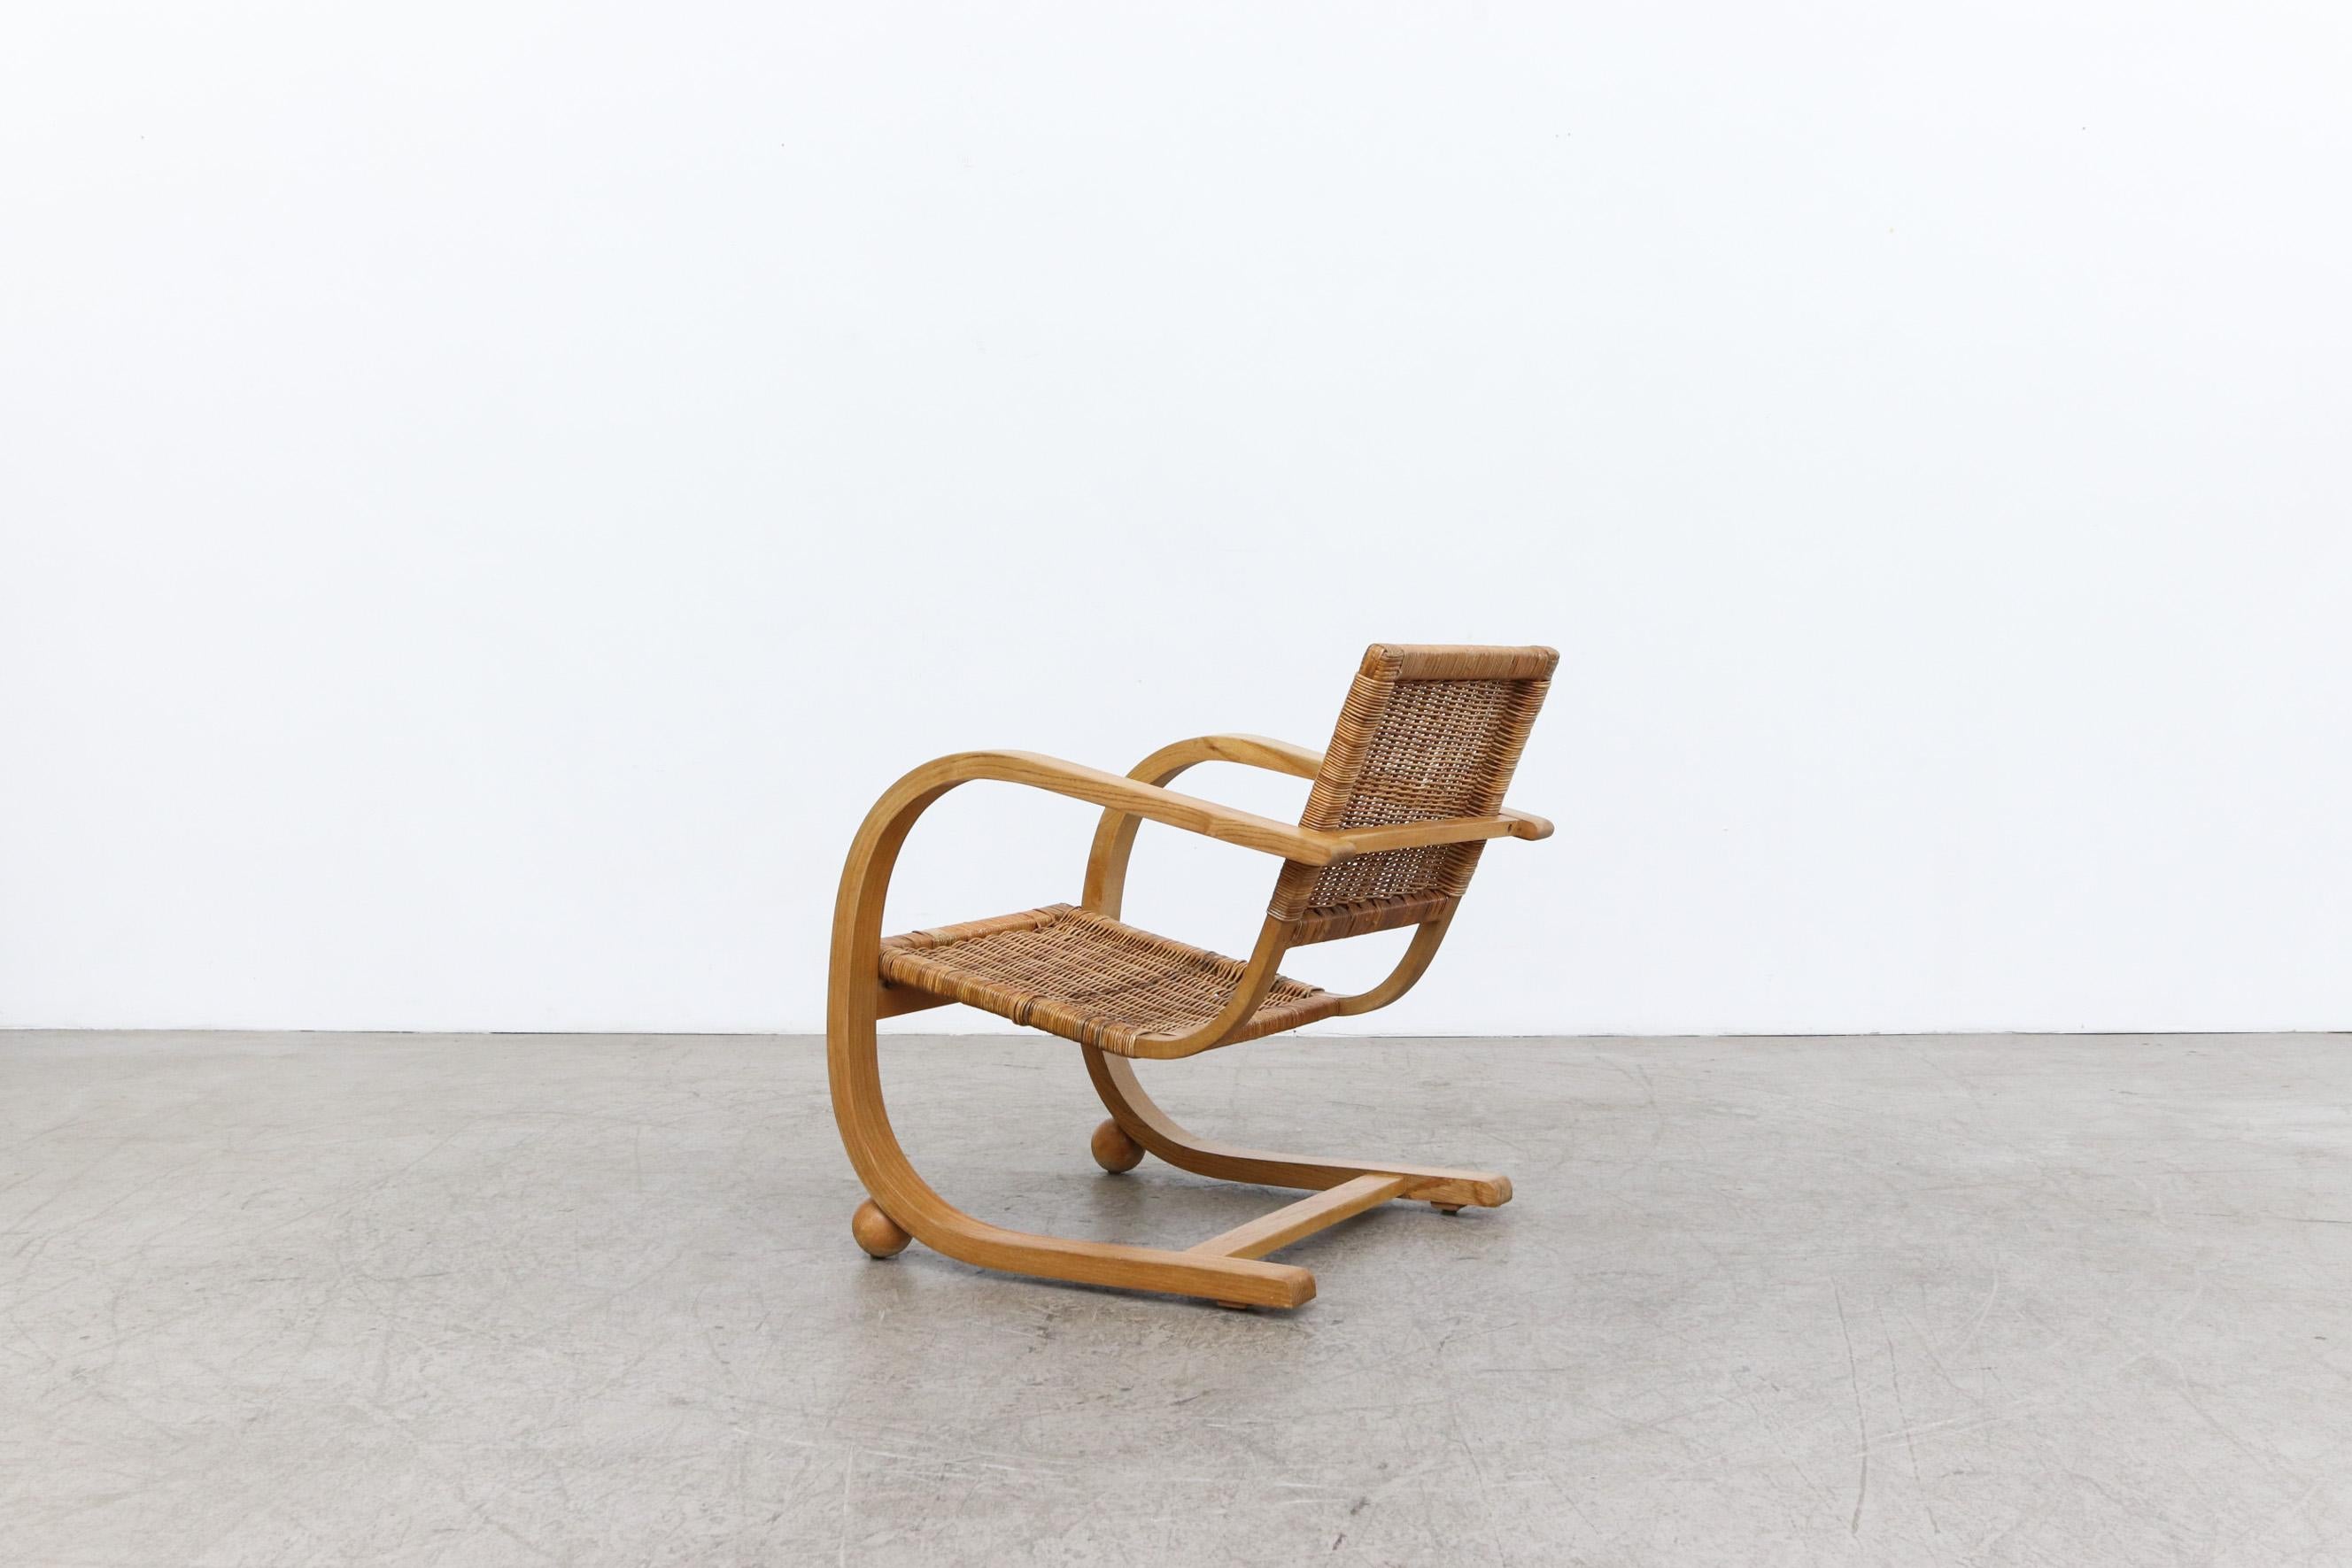 Hand-Woven Bas Van Pelt 'Attr' Bent Lounge Chair with Rattan Seat